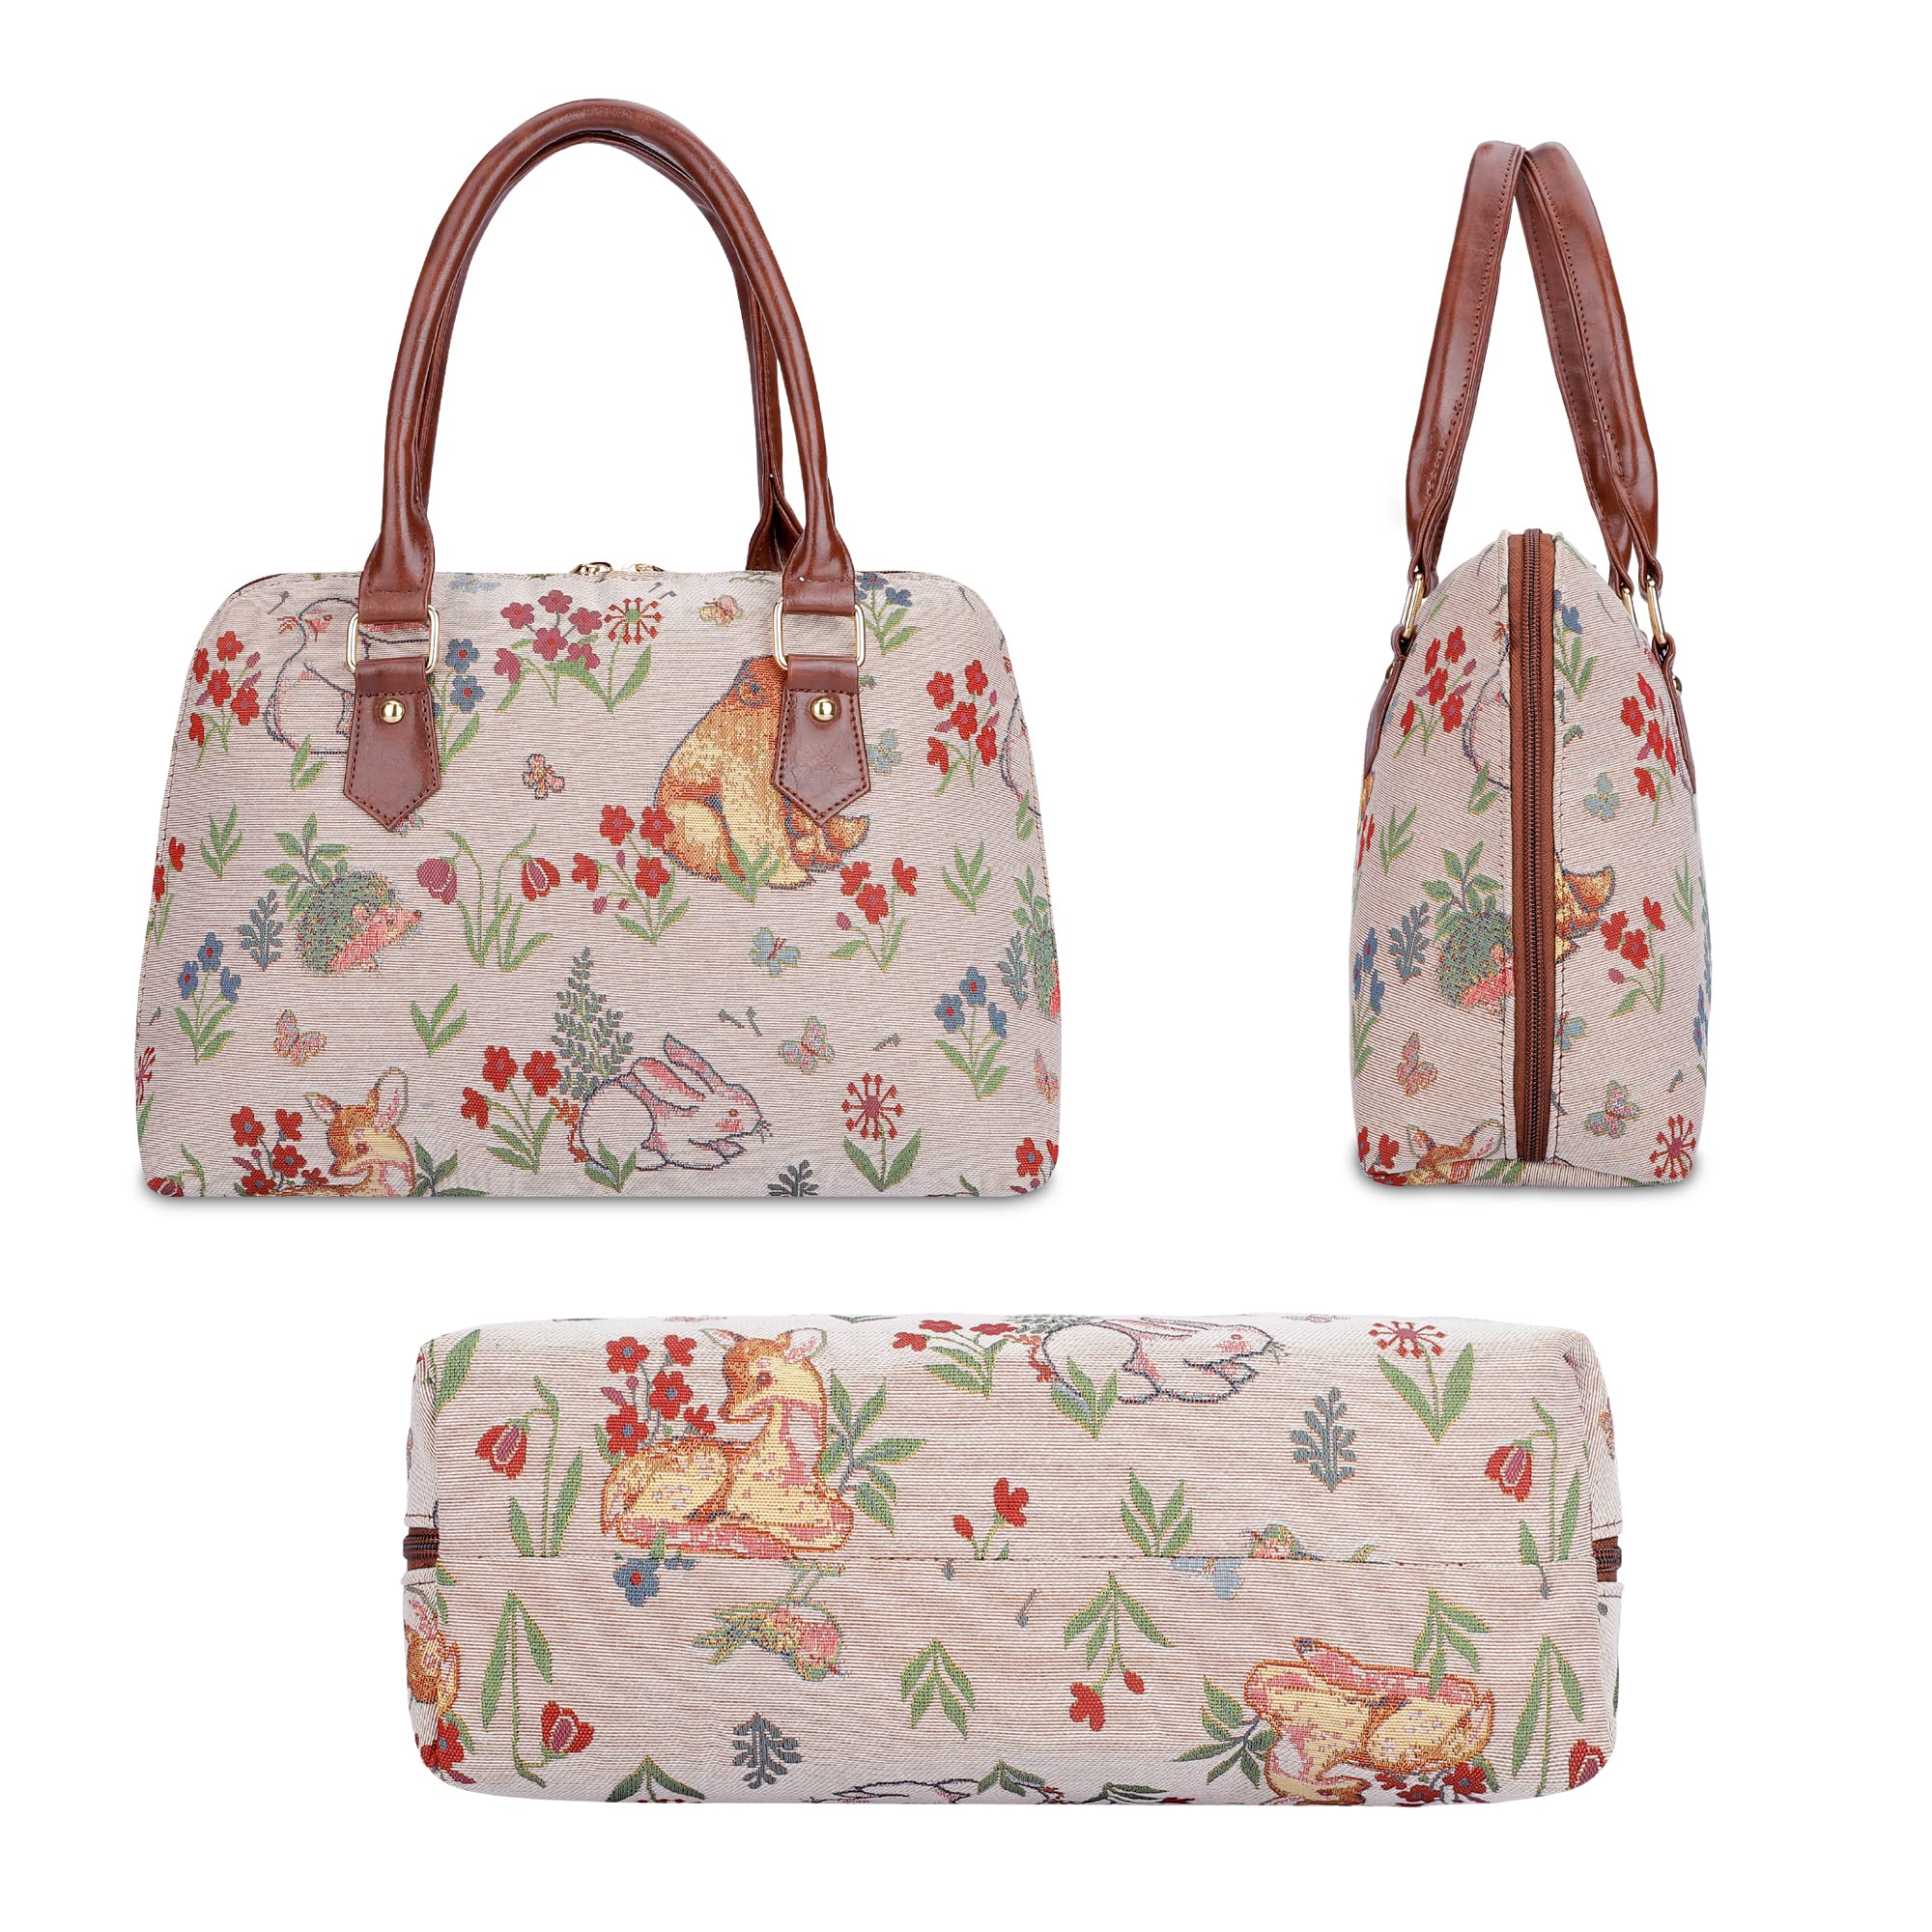 Buy CIGATI Floral Print Designer Ladies Purse Sling Bag Handbag with Men's  Wallet Combo For Women Purse (White) at Amazon.in